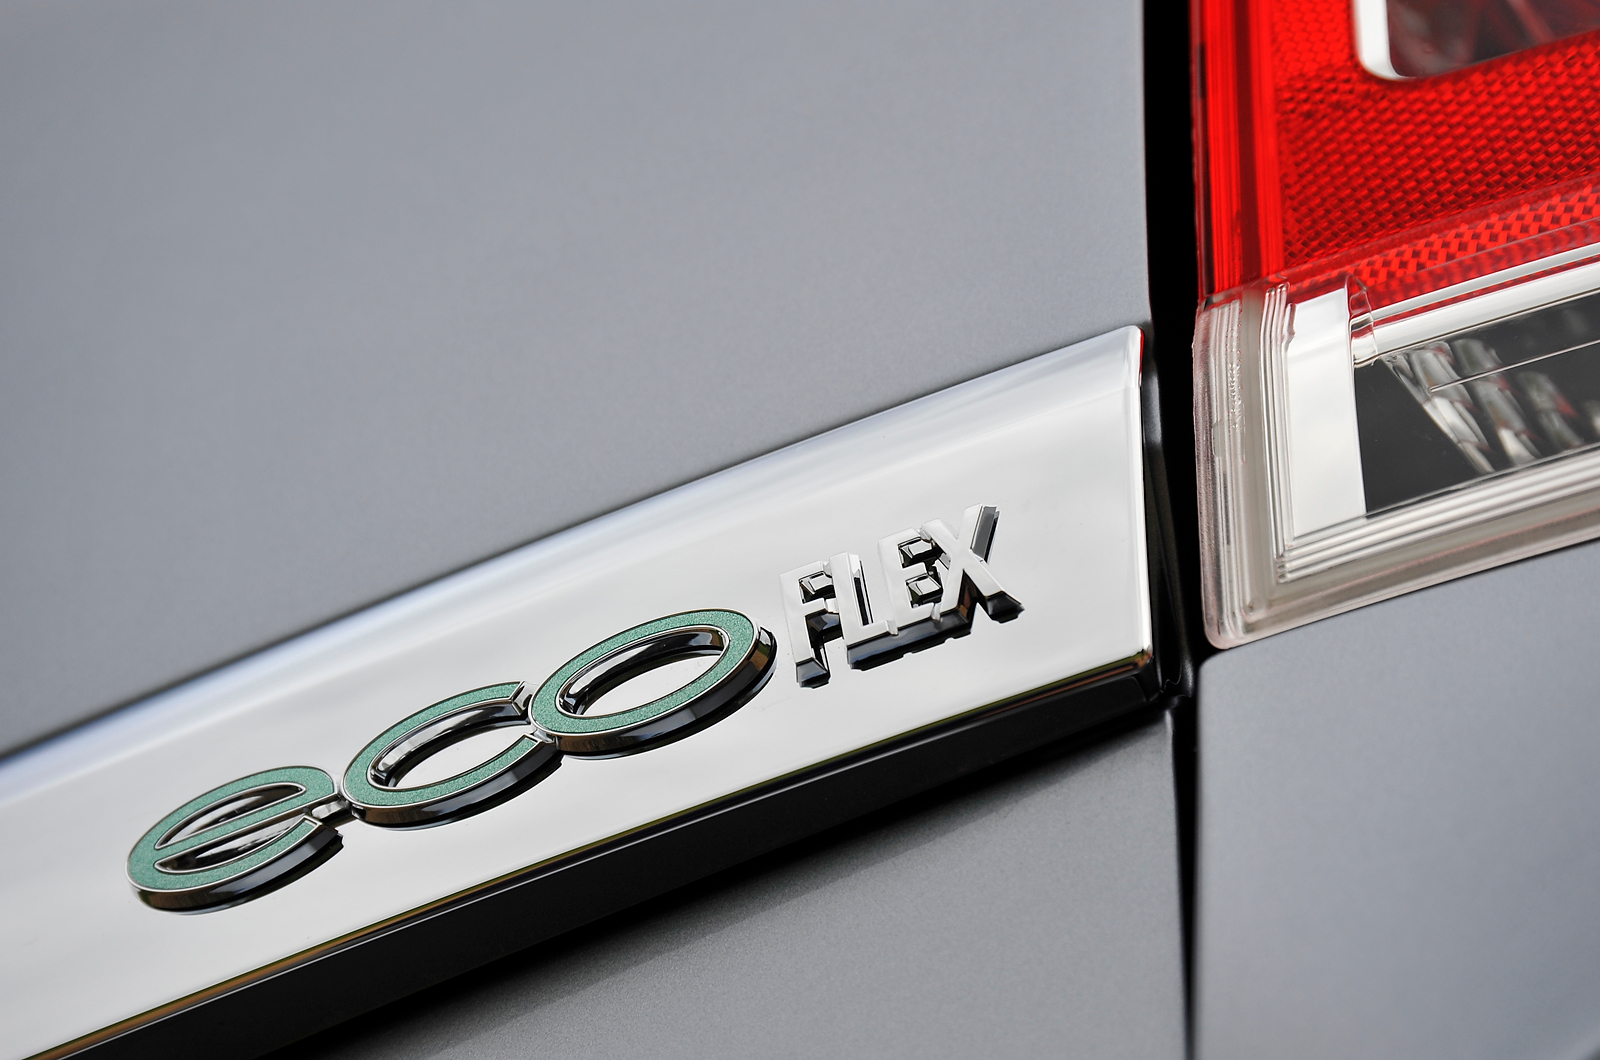 Vauxhall Zafira EcoFlex badging